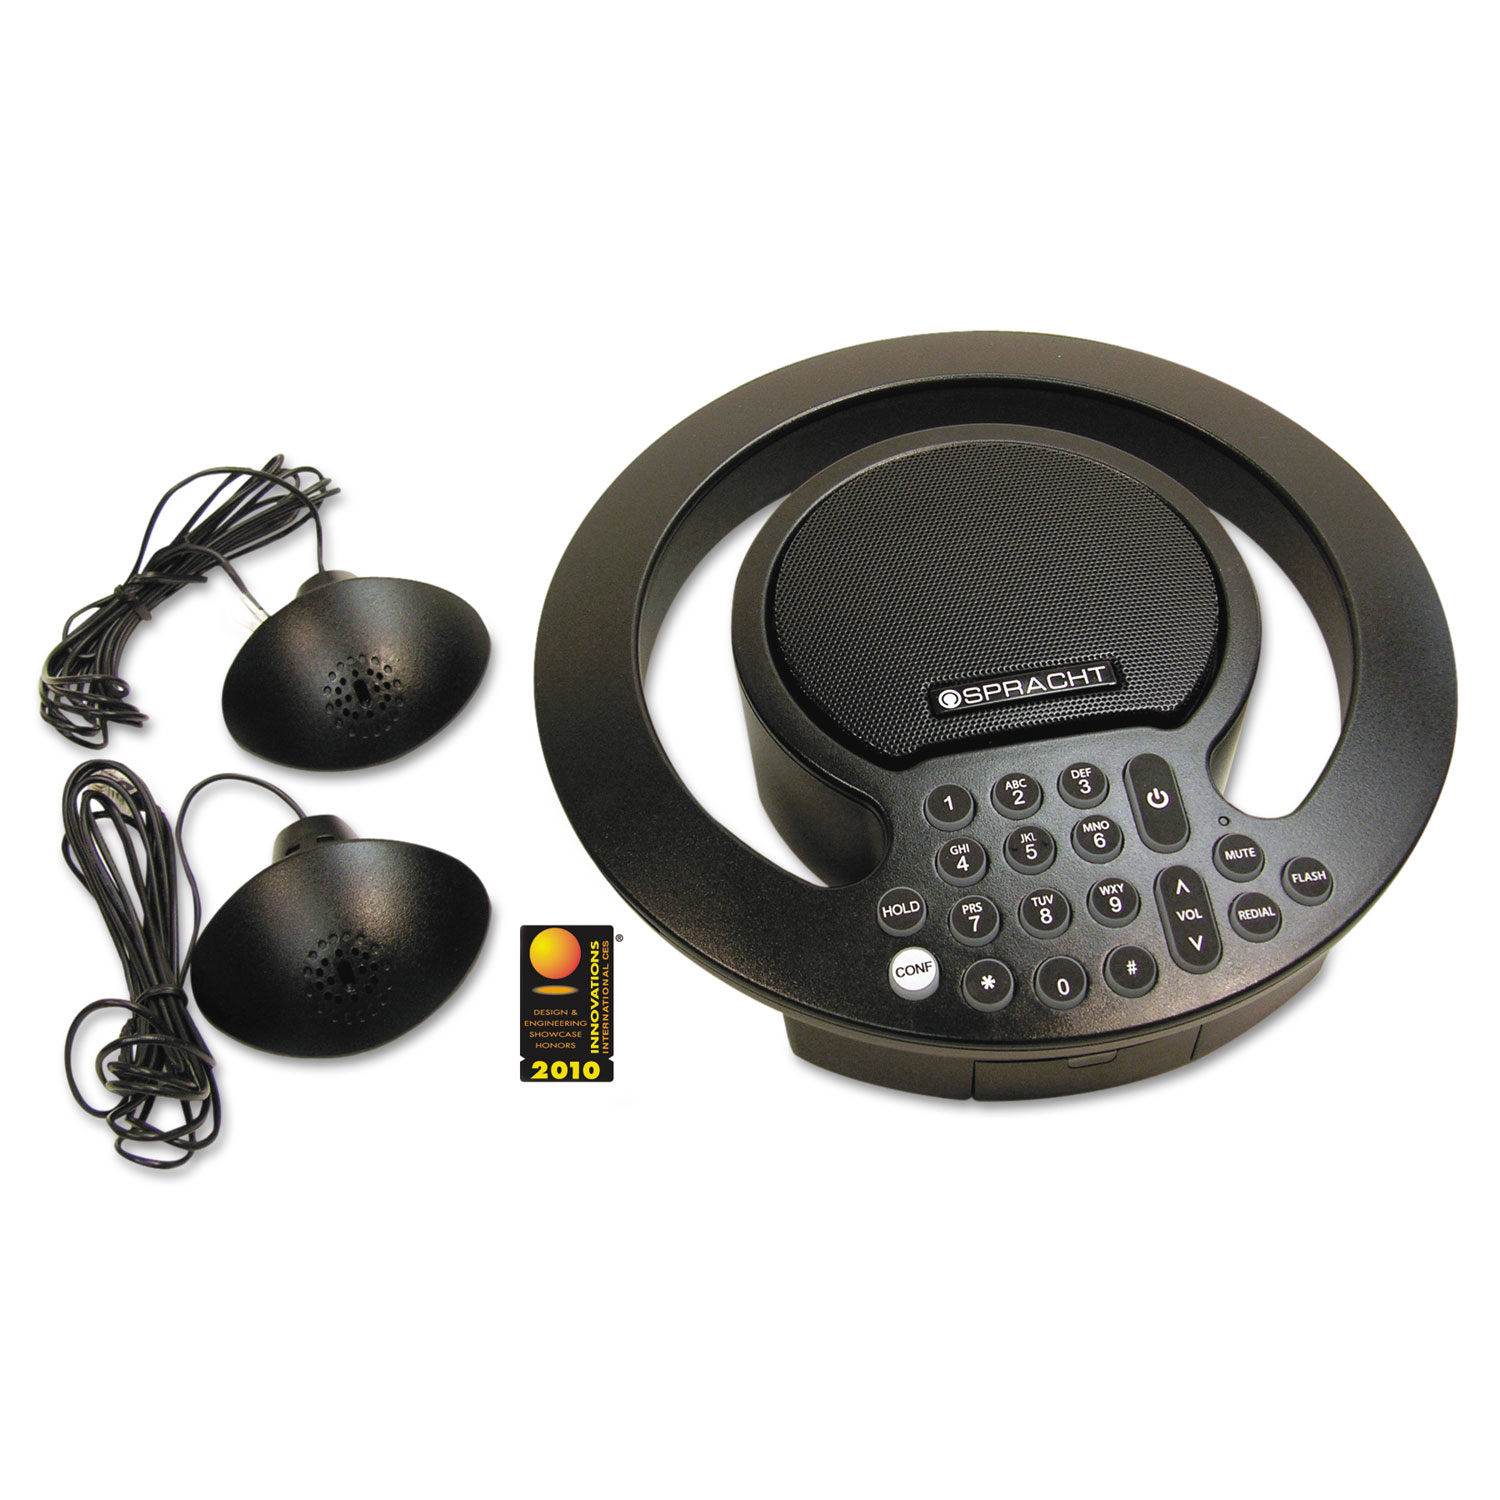  Spracht CP2018 Aura SoHo Plus Conference Phone, 3 Built-In/2 External Microphones, Black (SPTCP2018) 